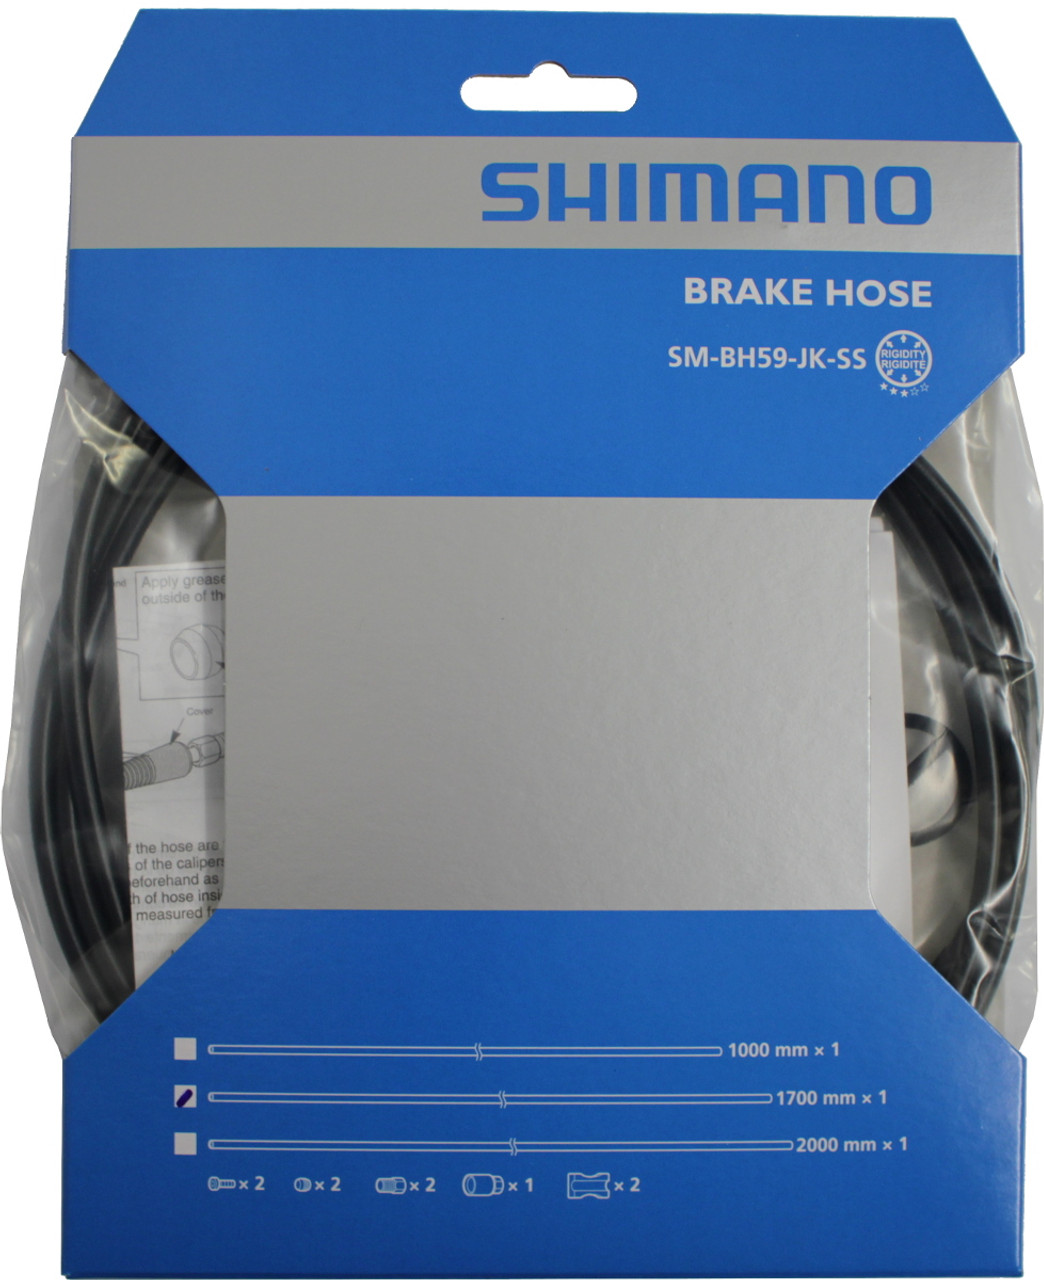 Shimano SM-BH90-JK Straight Brake Hose Kit